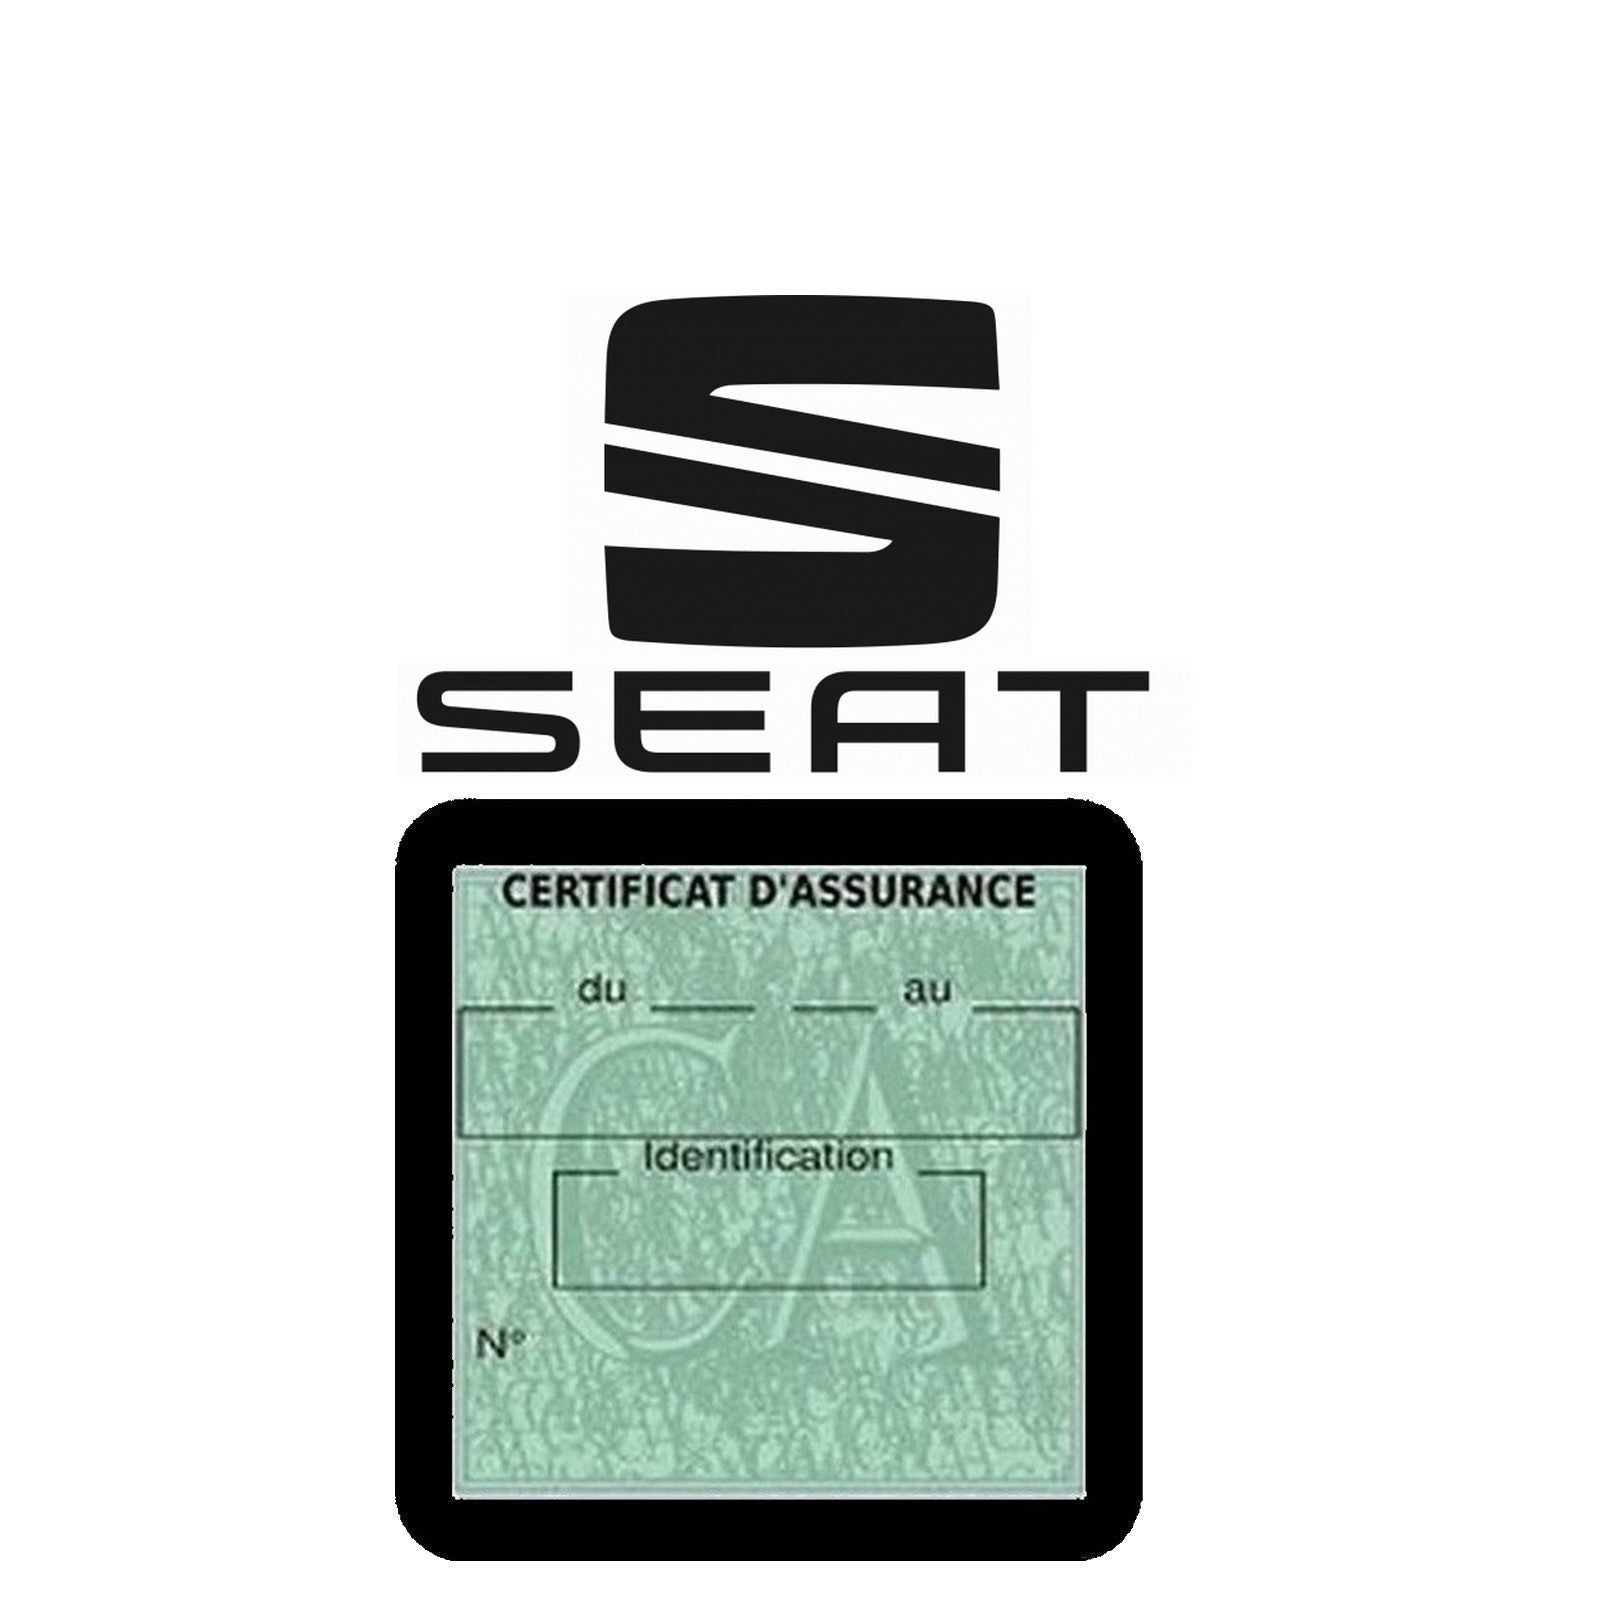 SEAT VS124 Etui assurance auto clicktofournisseur.com